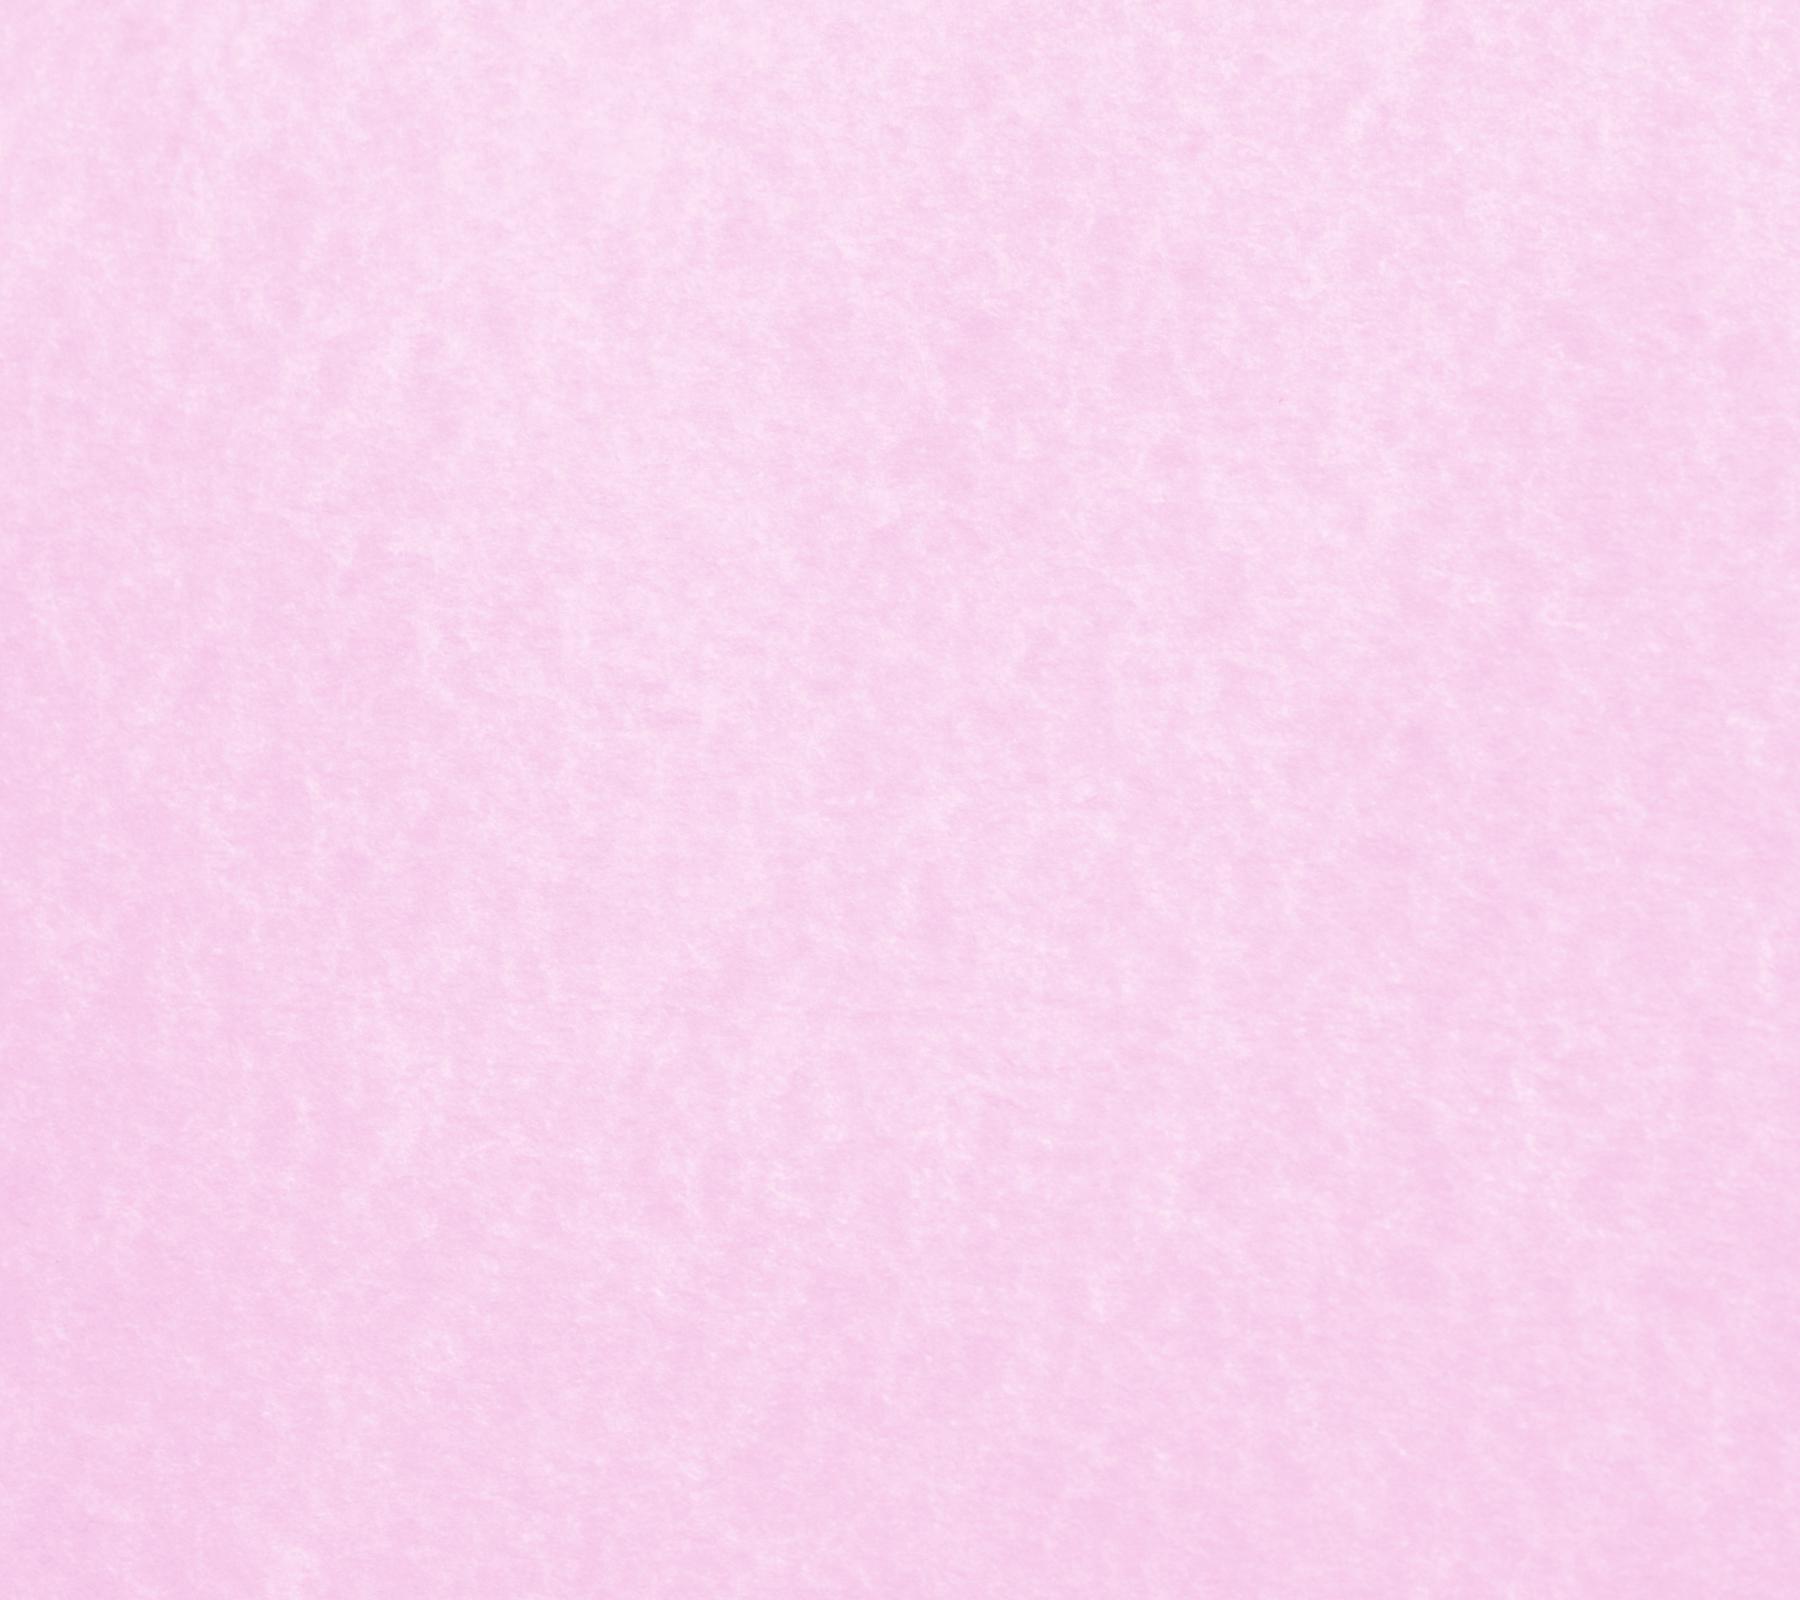 Light Pink Background. Free Wallpaper